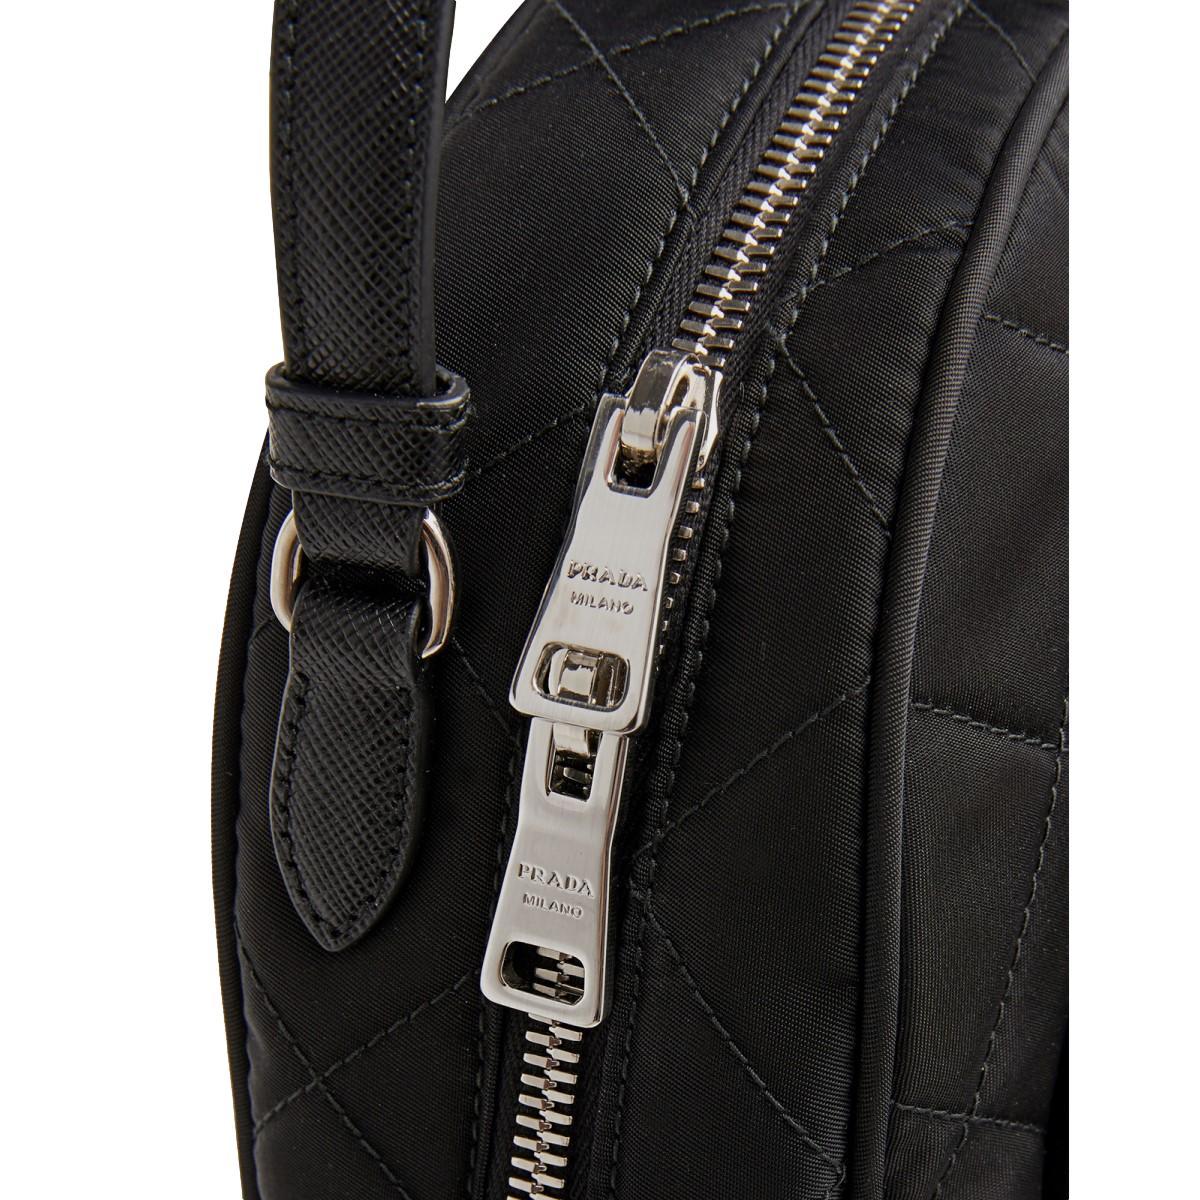 Prada Zaino Black Tessuto Nylon Quilted Backpack 1BZ066 at_Queen_Bee_of_Beverly_Hills